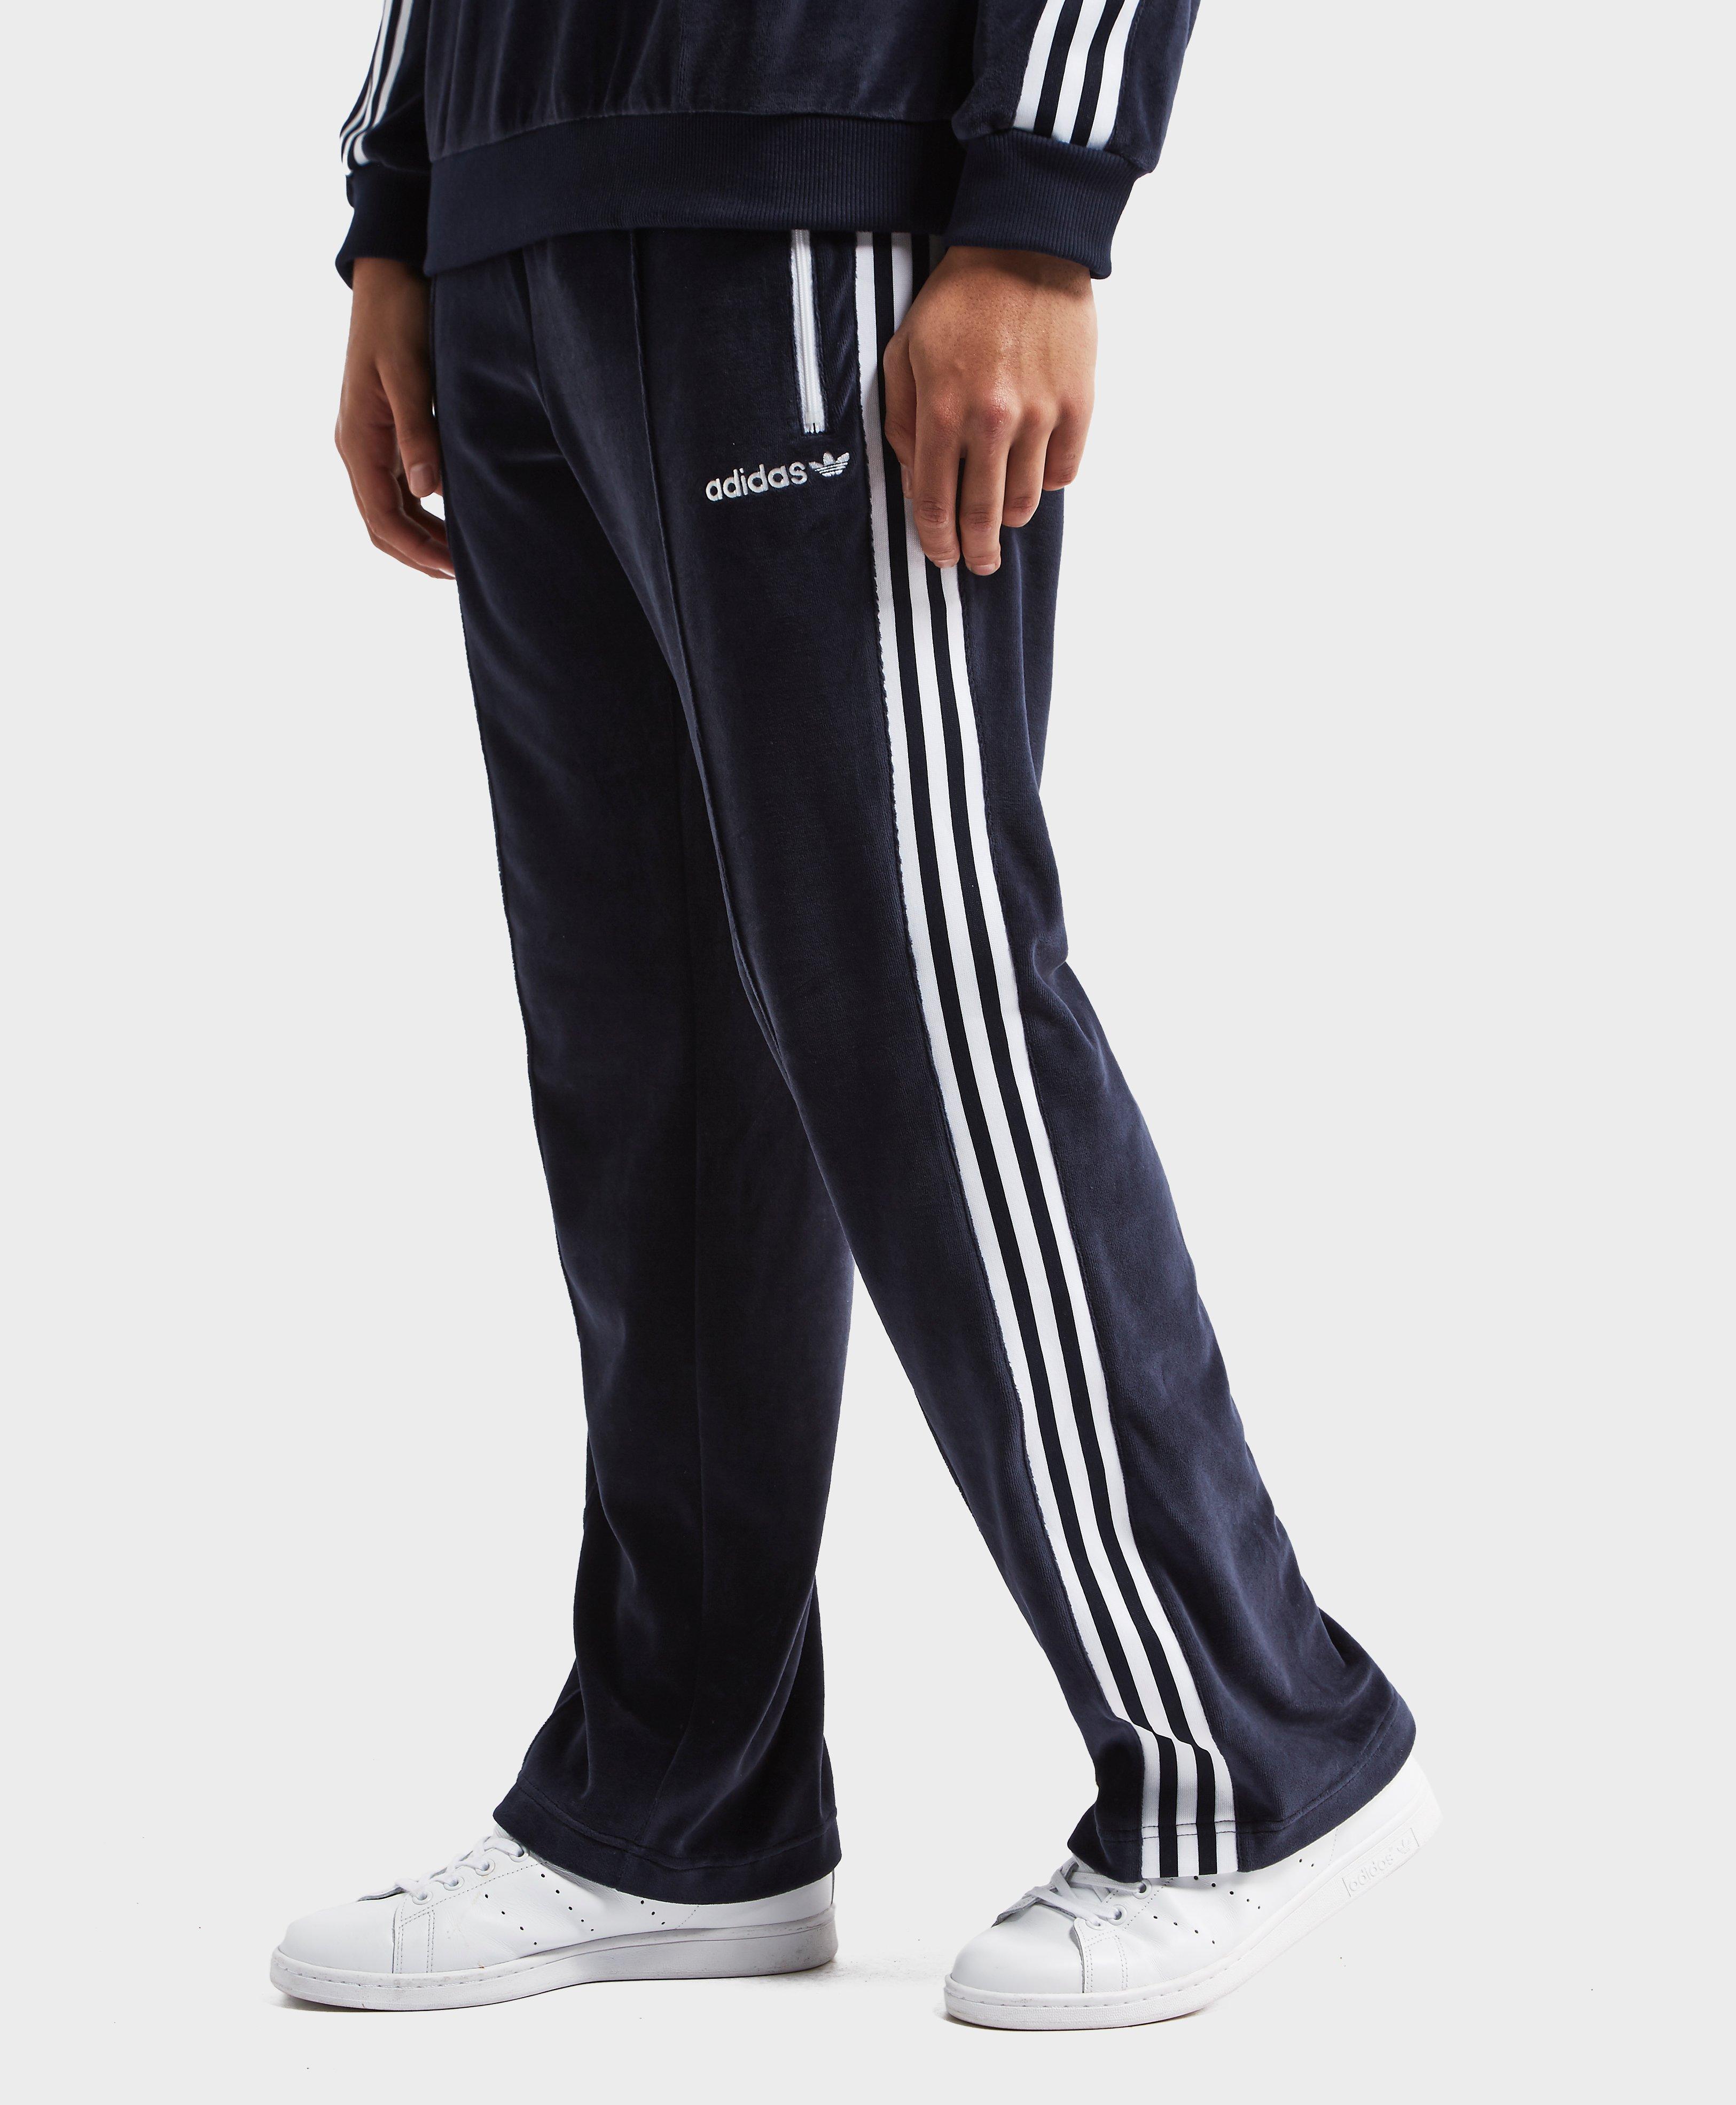 adidas Originals Cotton Velour Track Pants in Blue for Men - Lyst